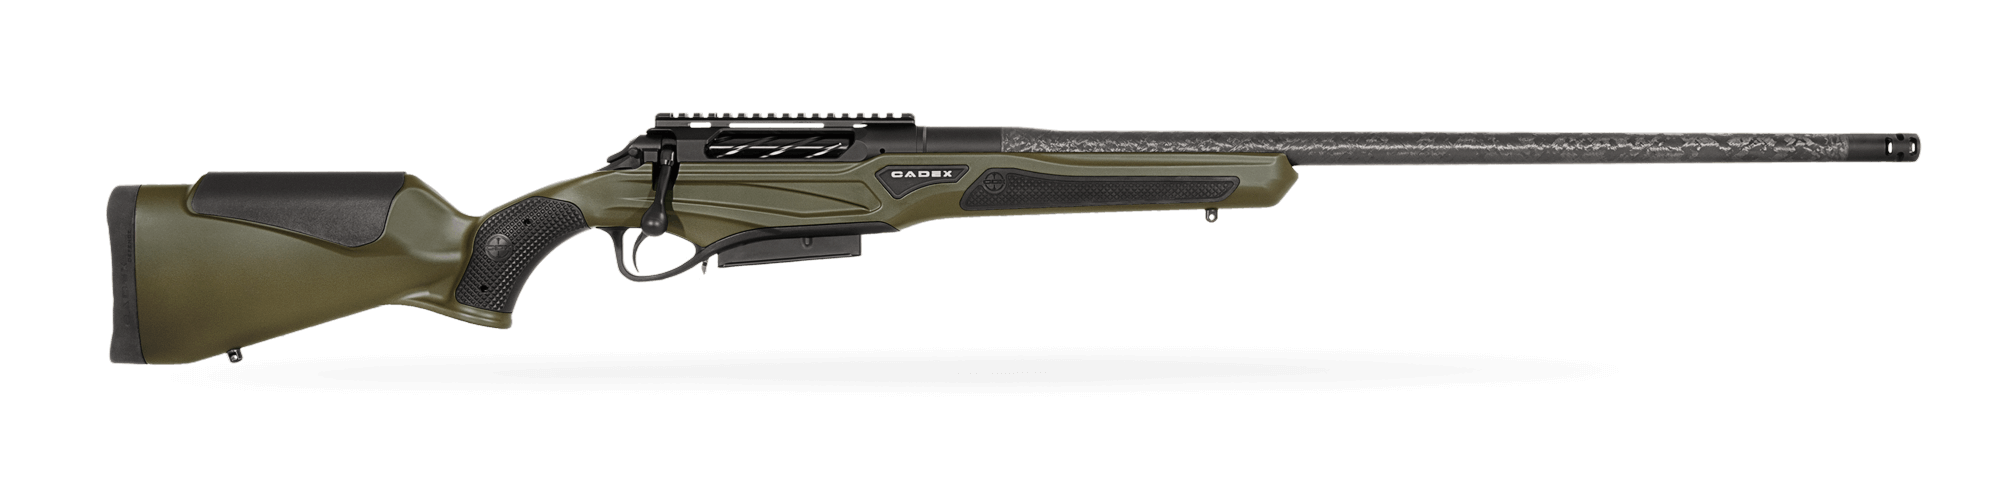 Cadex Cdx-r7 Sa Series Rifle For Sale 